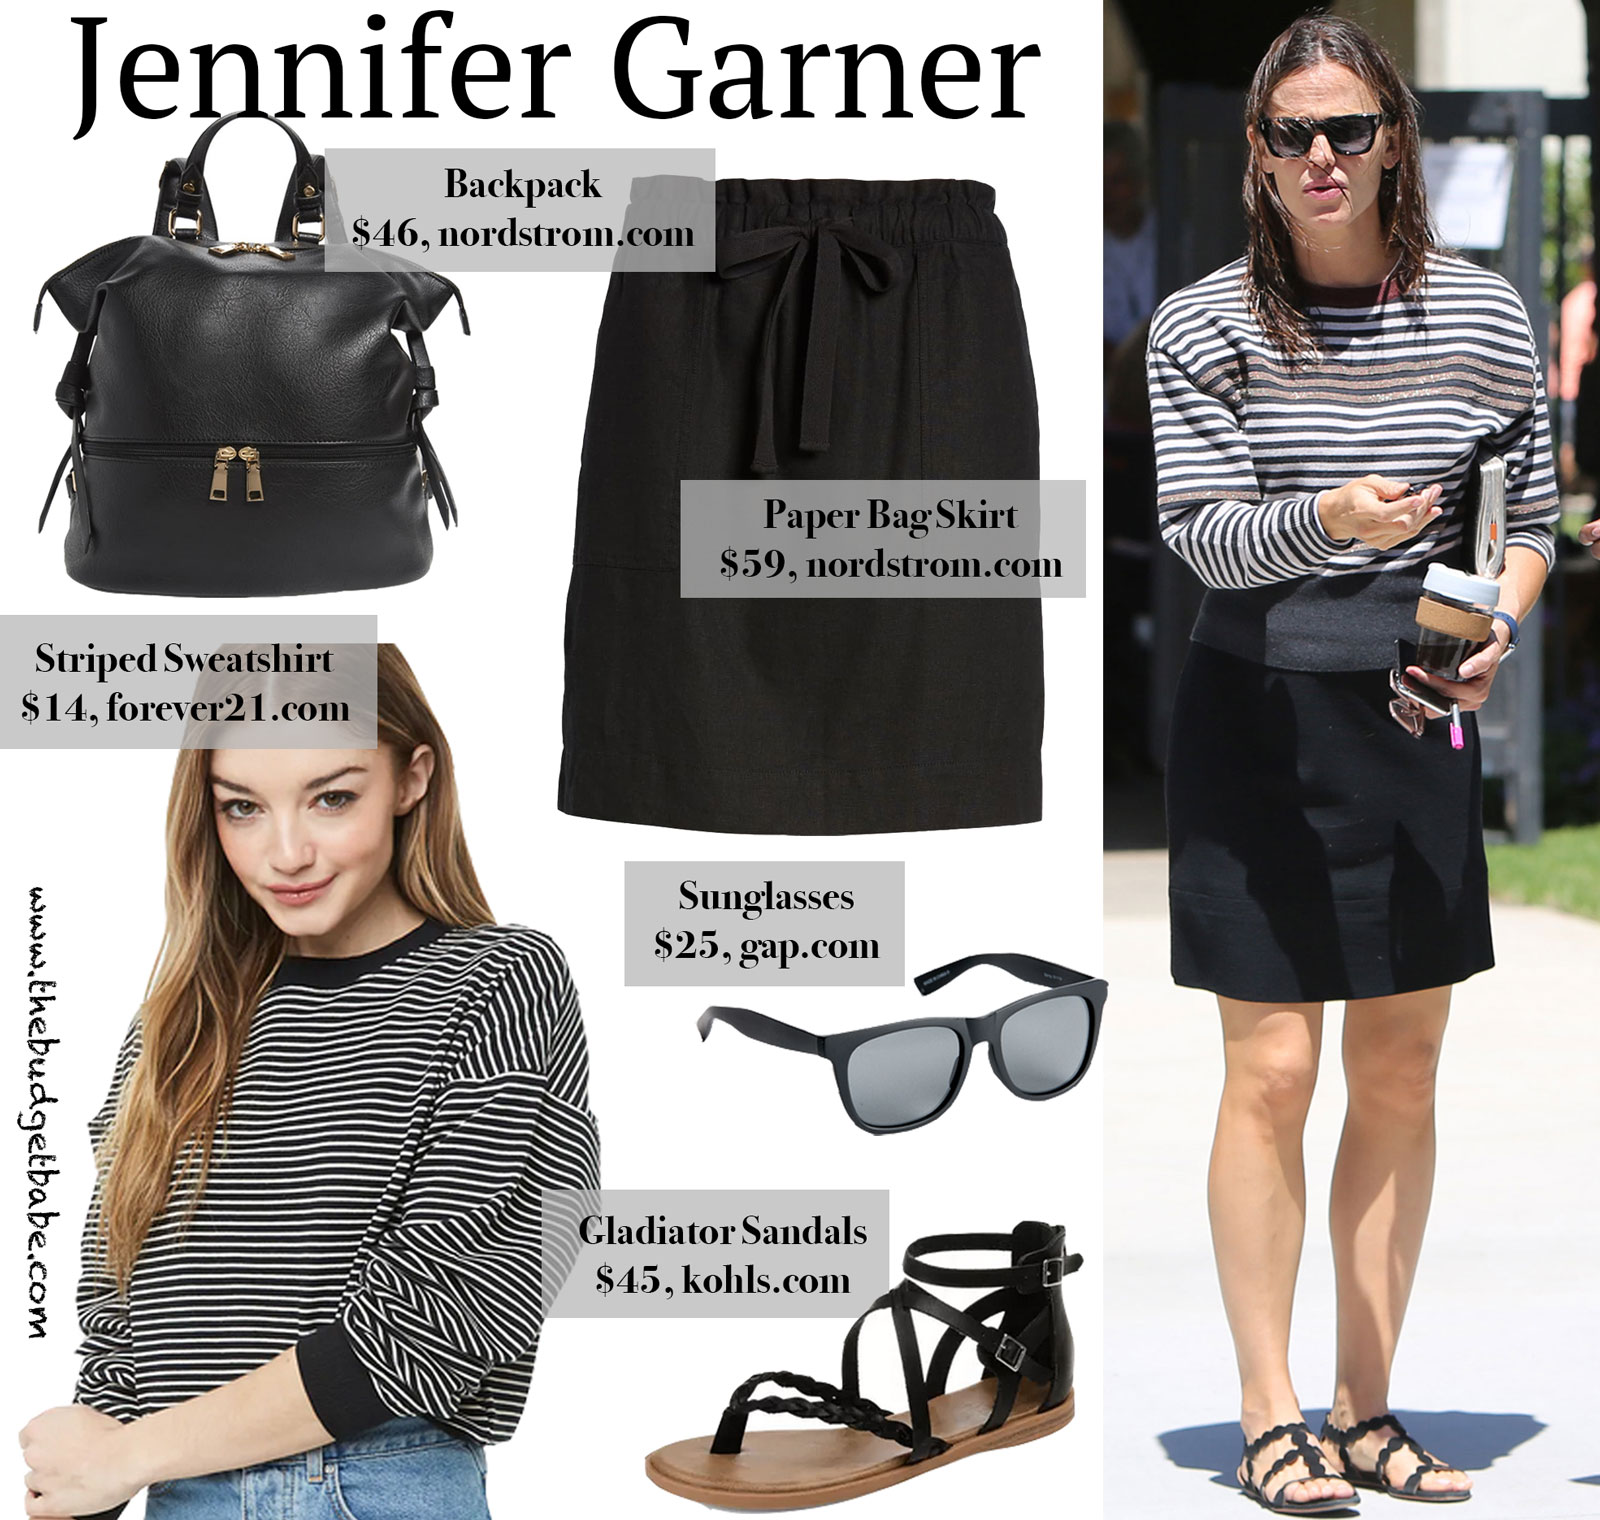 Jennifer Garner Stripe Sweater Look for Less